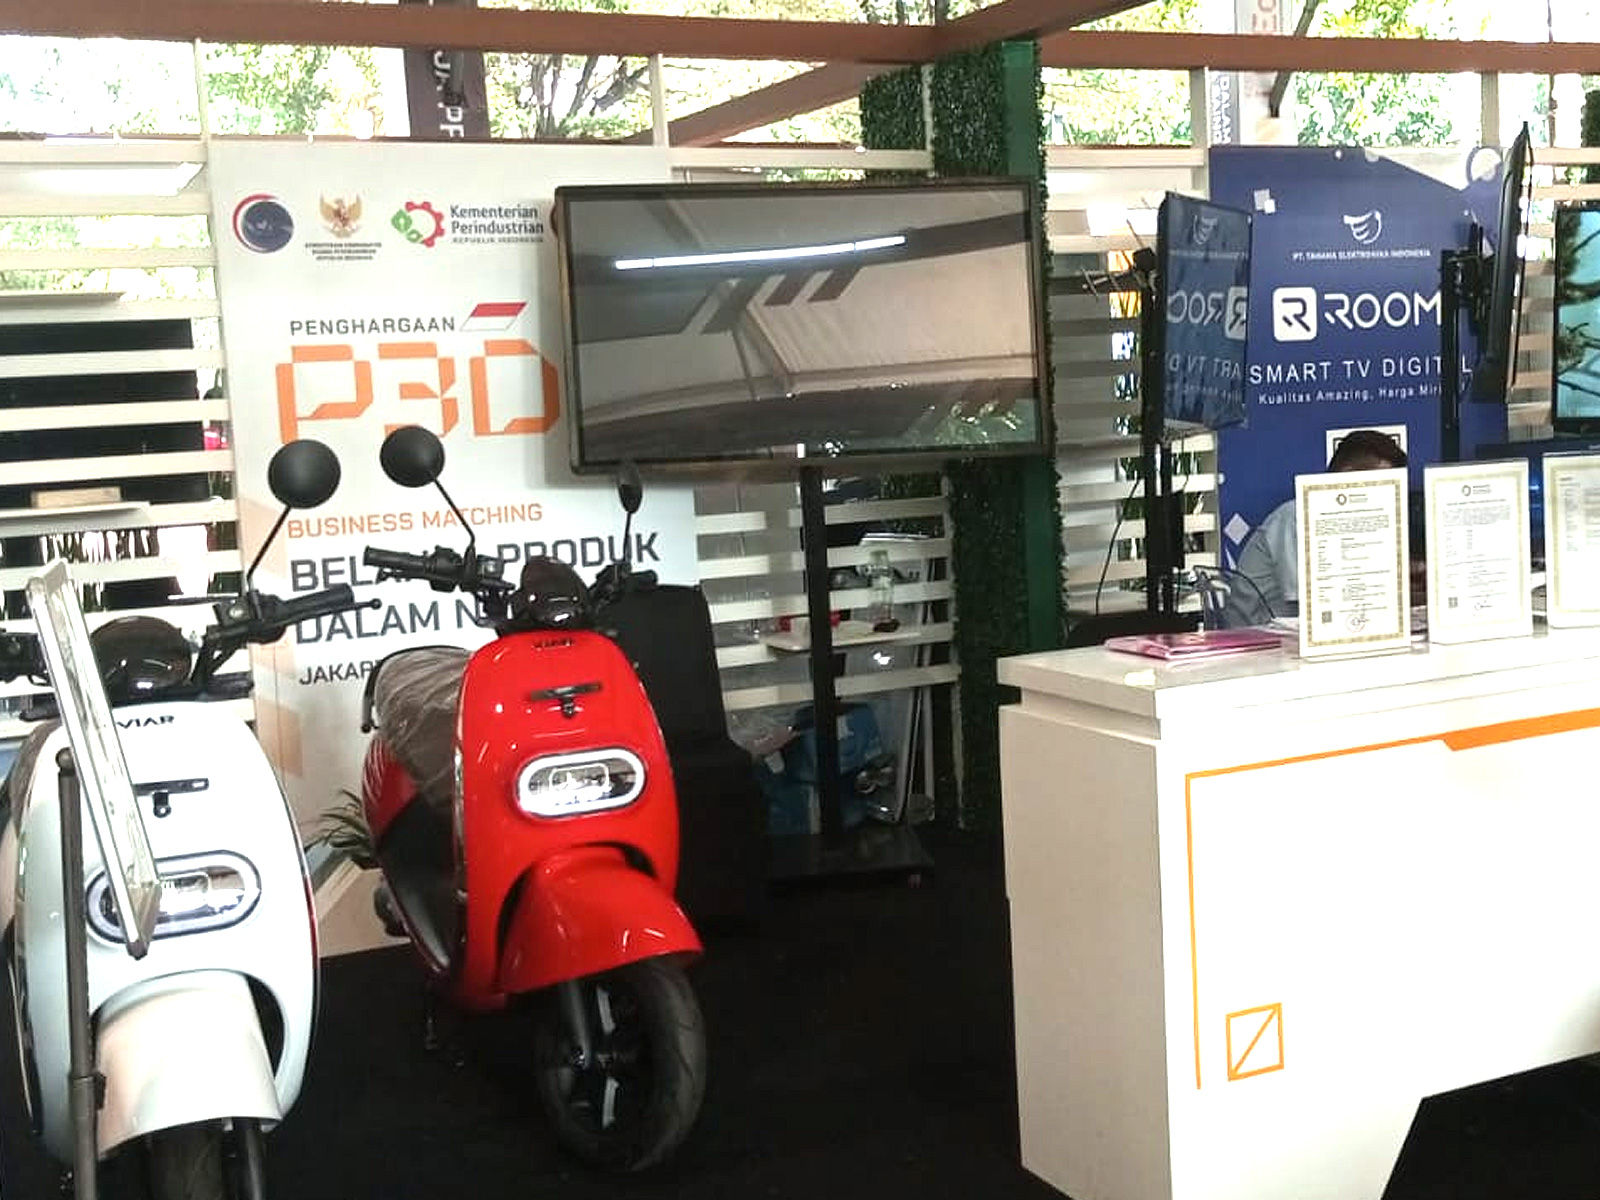 VIAR Motor Indonesia berpartisipasi dalam Pameran Peningkatan Penggunaan Produksi Dalam Negeri yang diselenggarakan oleh Kementerian Perindustrian Indonesia.